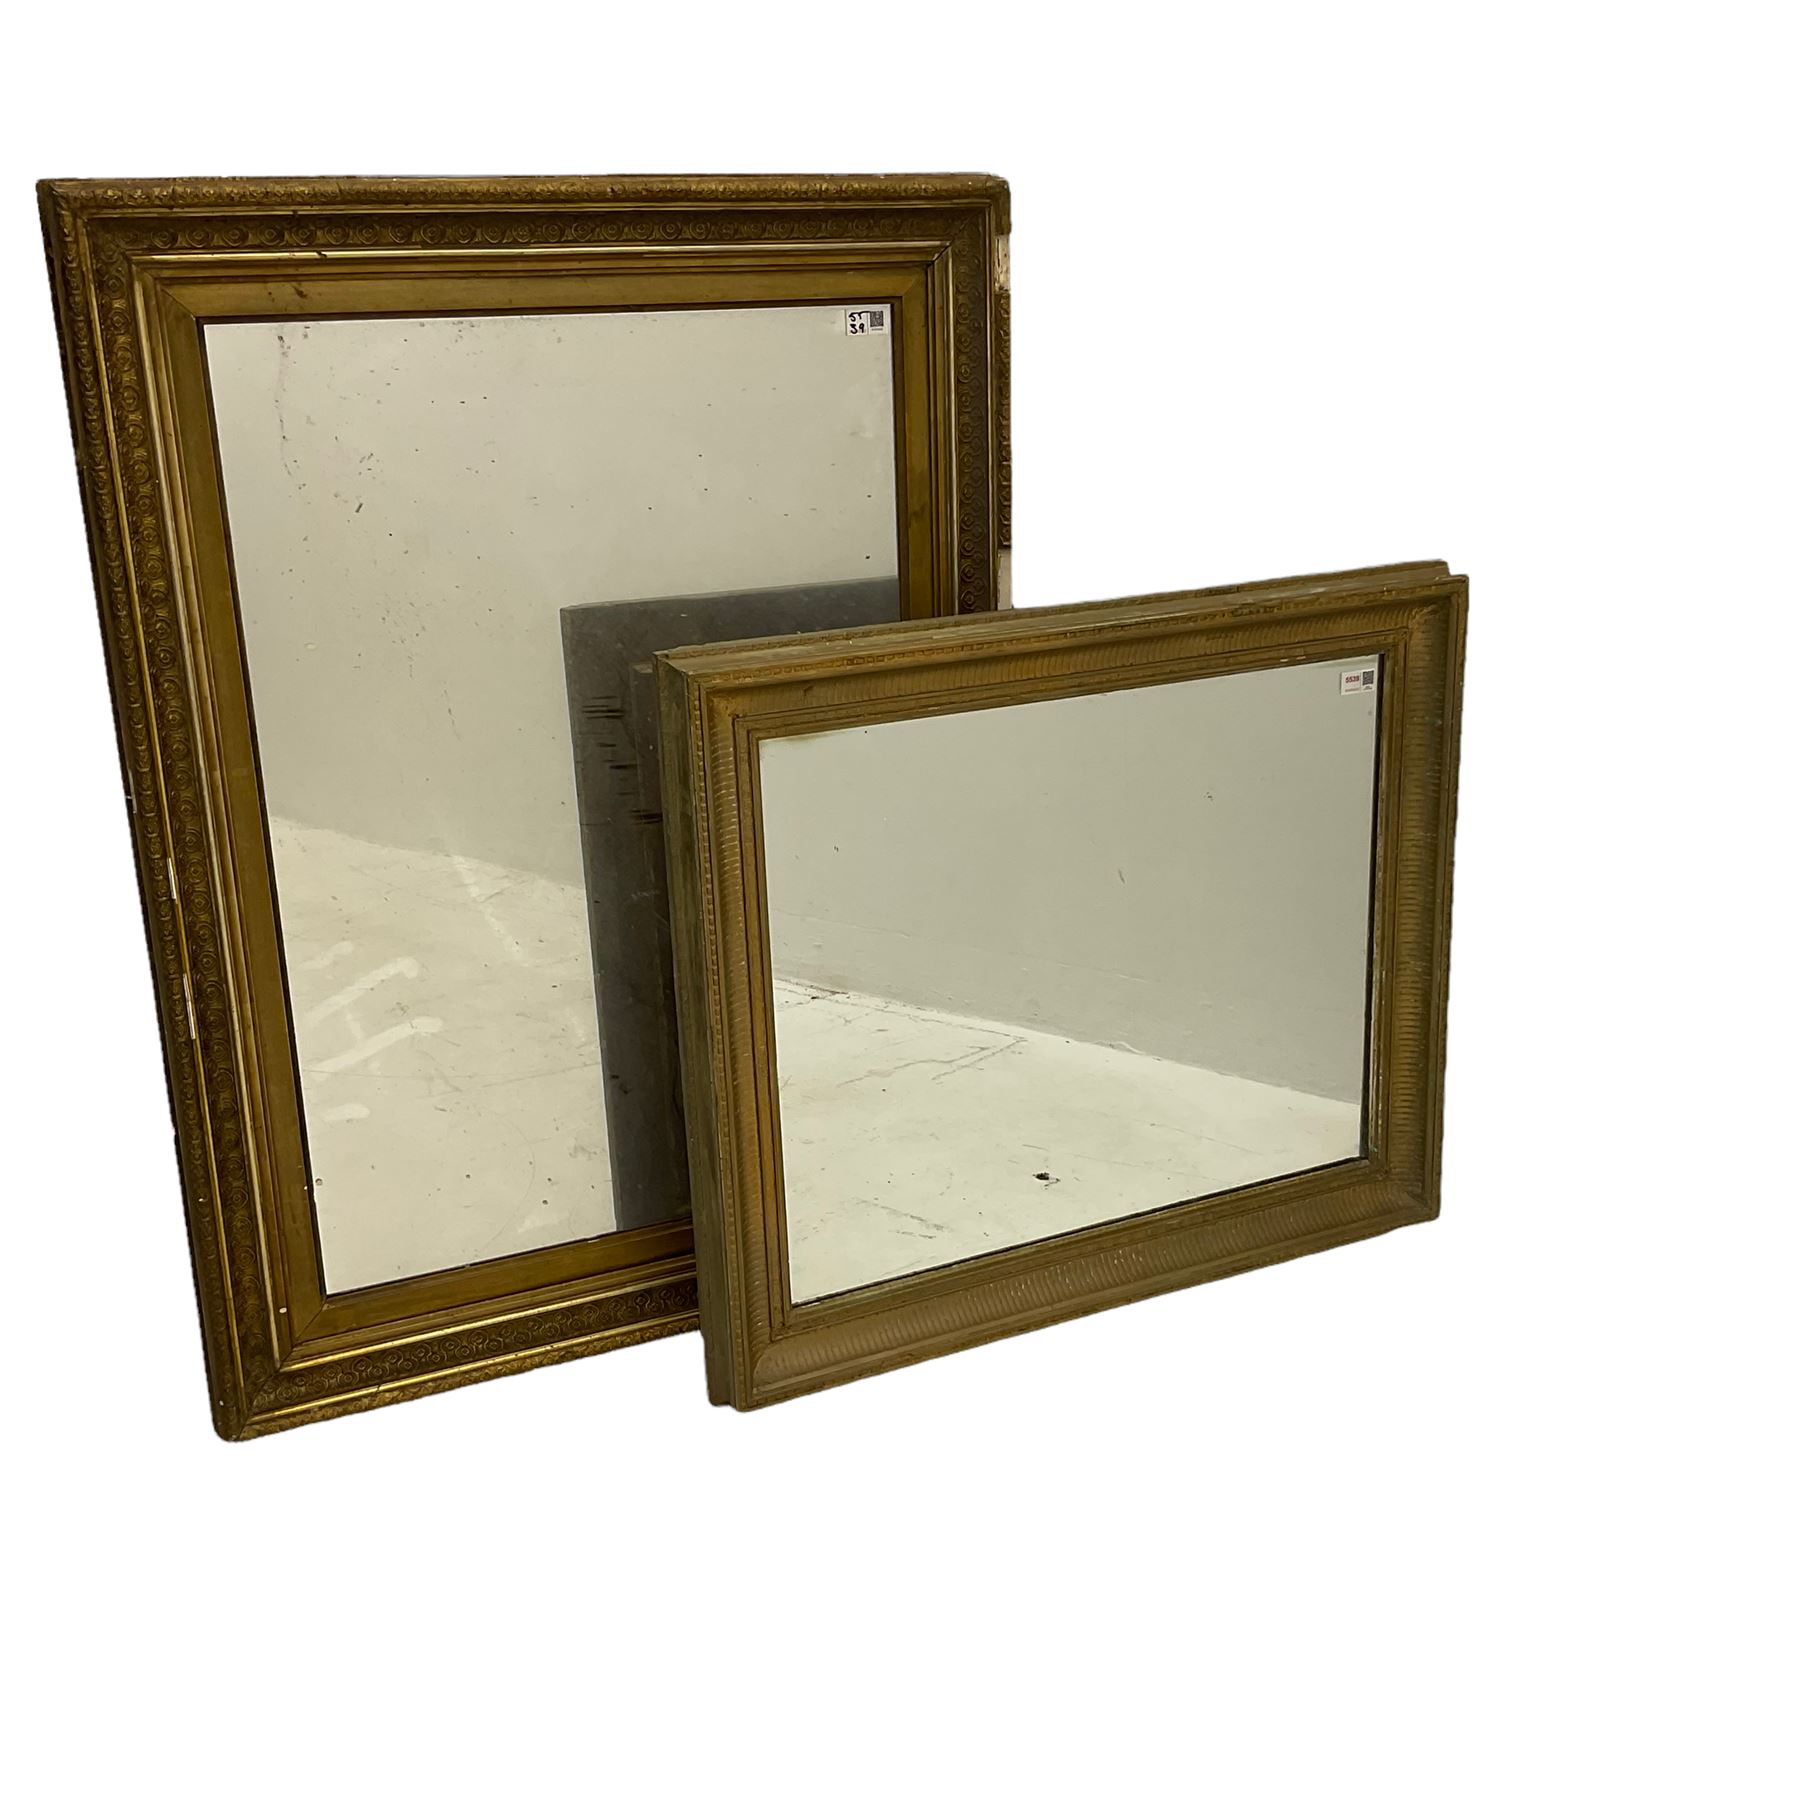 Rectangular mirror in gilt frame (78cm x 104cm)